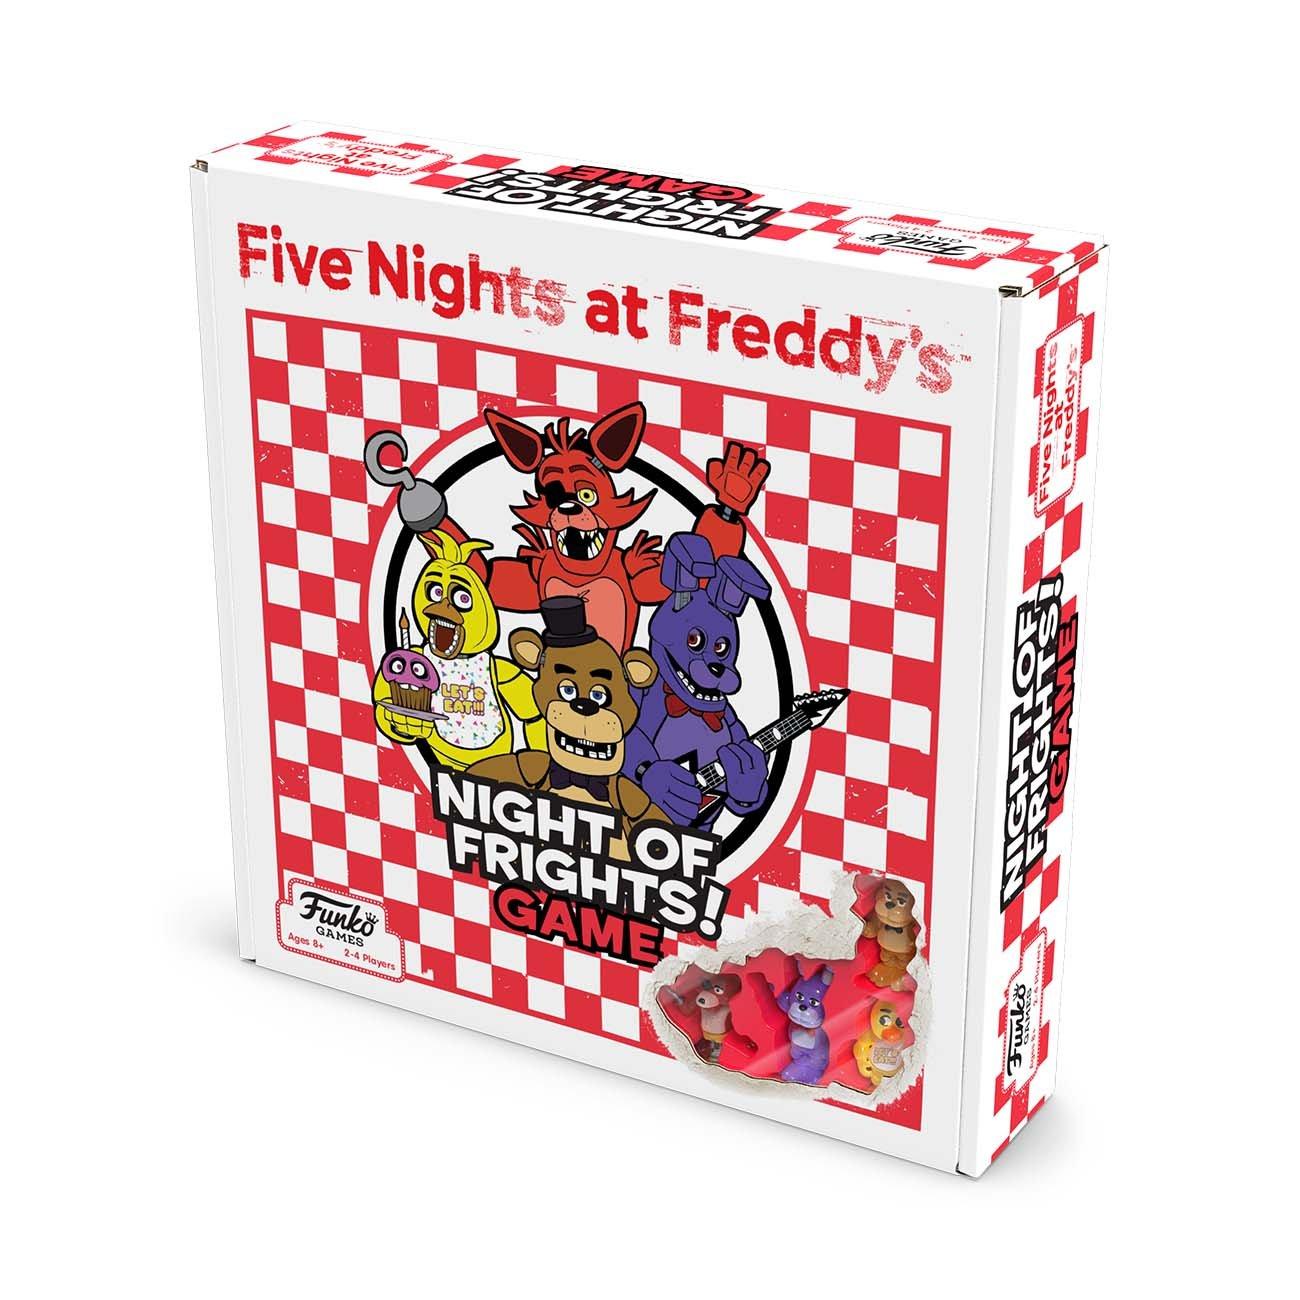 FNAF Games - Play Five Nights at Freddy's Games